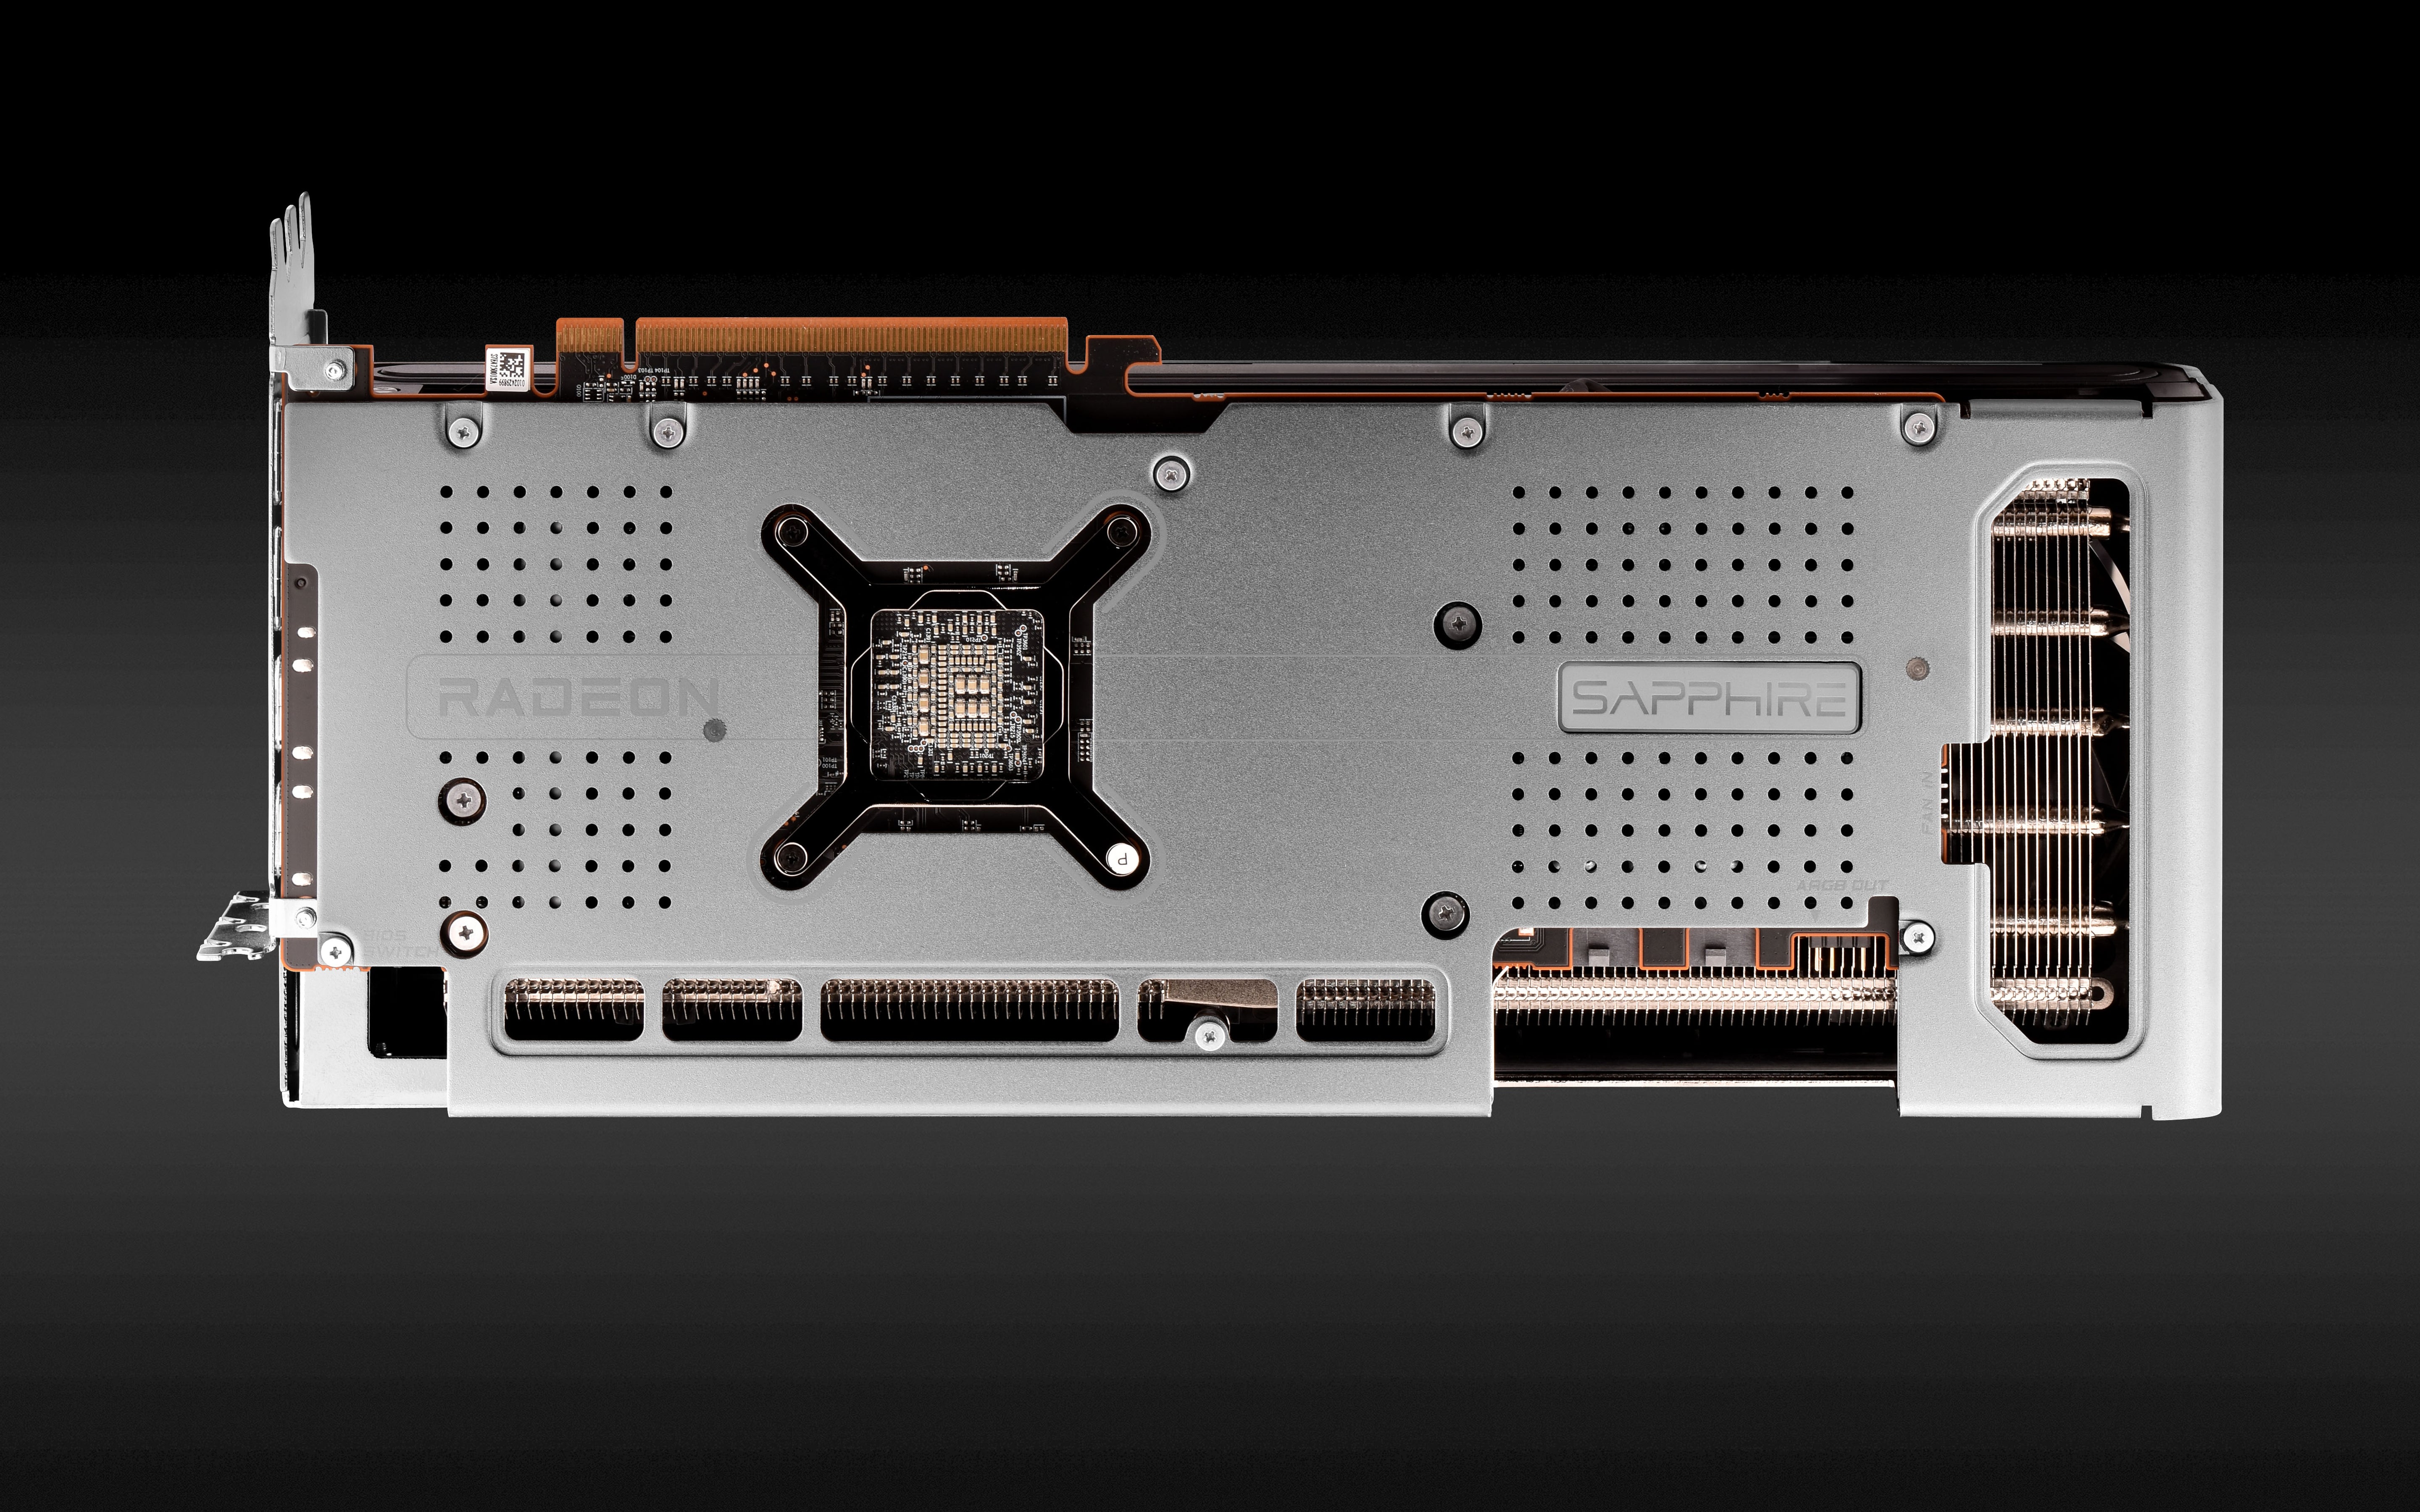 Sapphire Nitro+ AMD Radeon RX 7900 GAMING 16GB GDDR6 OC 顯示卡